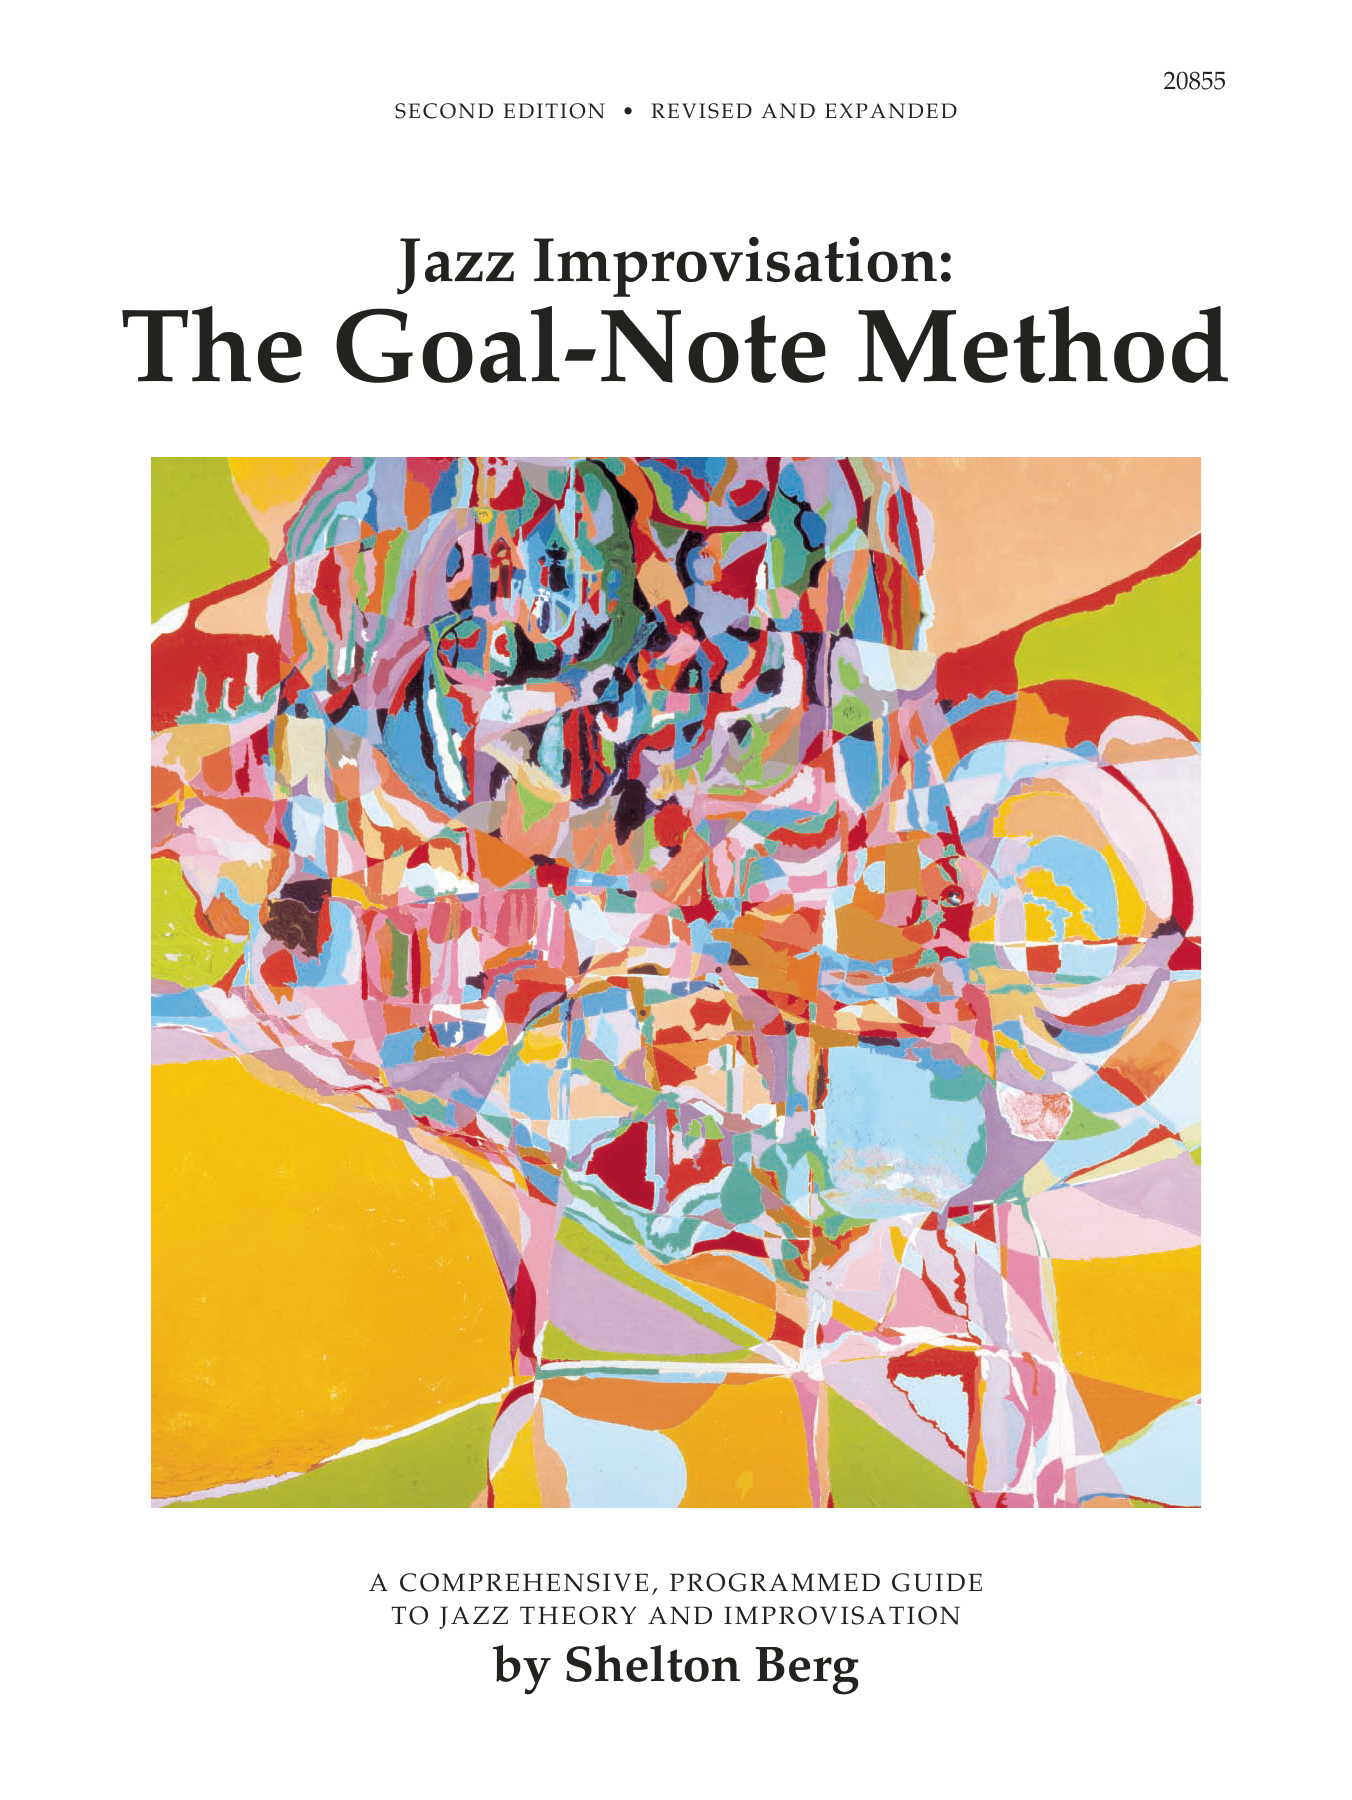 Download Shelton Berg Jazz Improvisation: The Goal-Note Metho Sheet Music